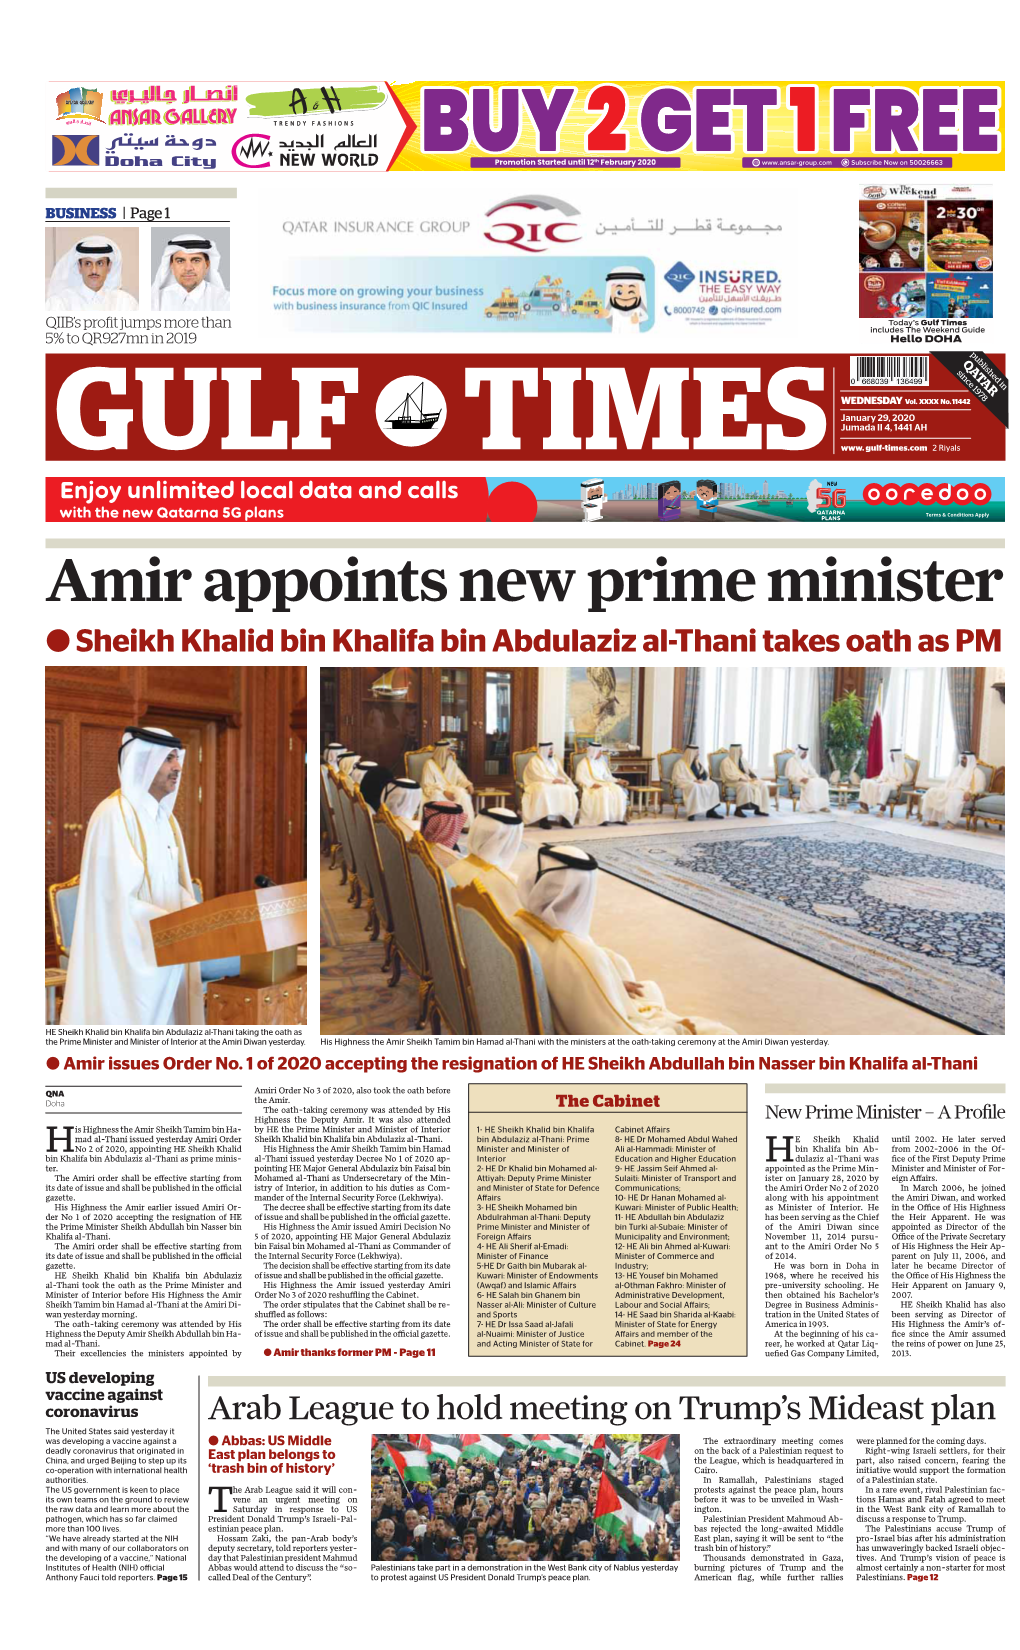 Amir Appoints New Prime Minister O Sheikh Khalid Bin Khalifa Bin Abdulaziz Al-Thani Takes Oath As PM